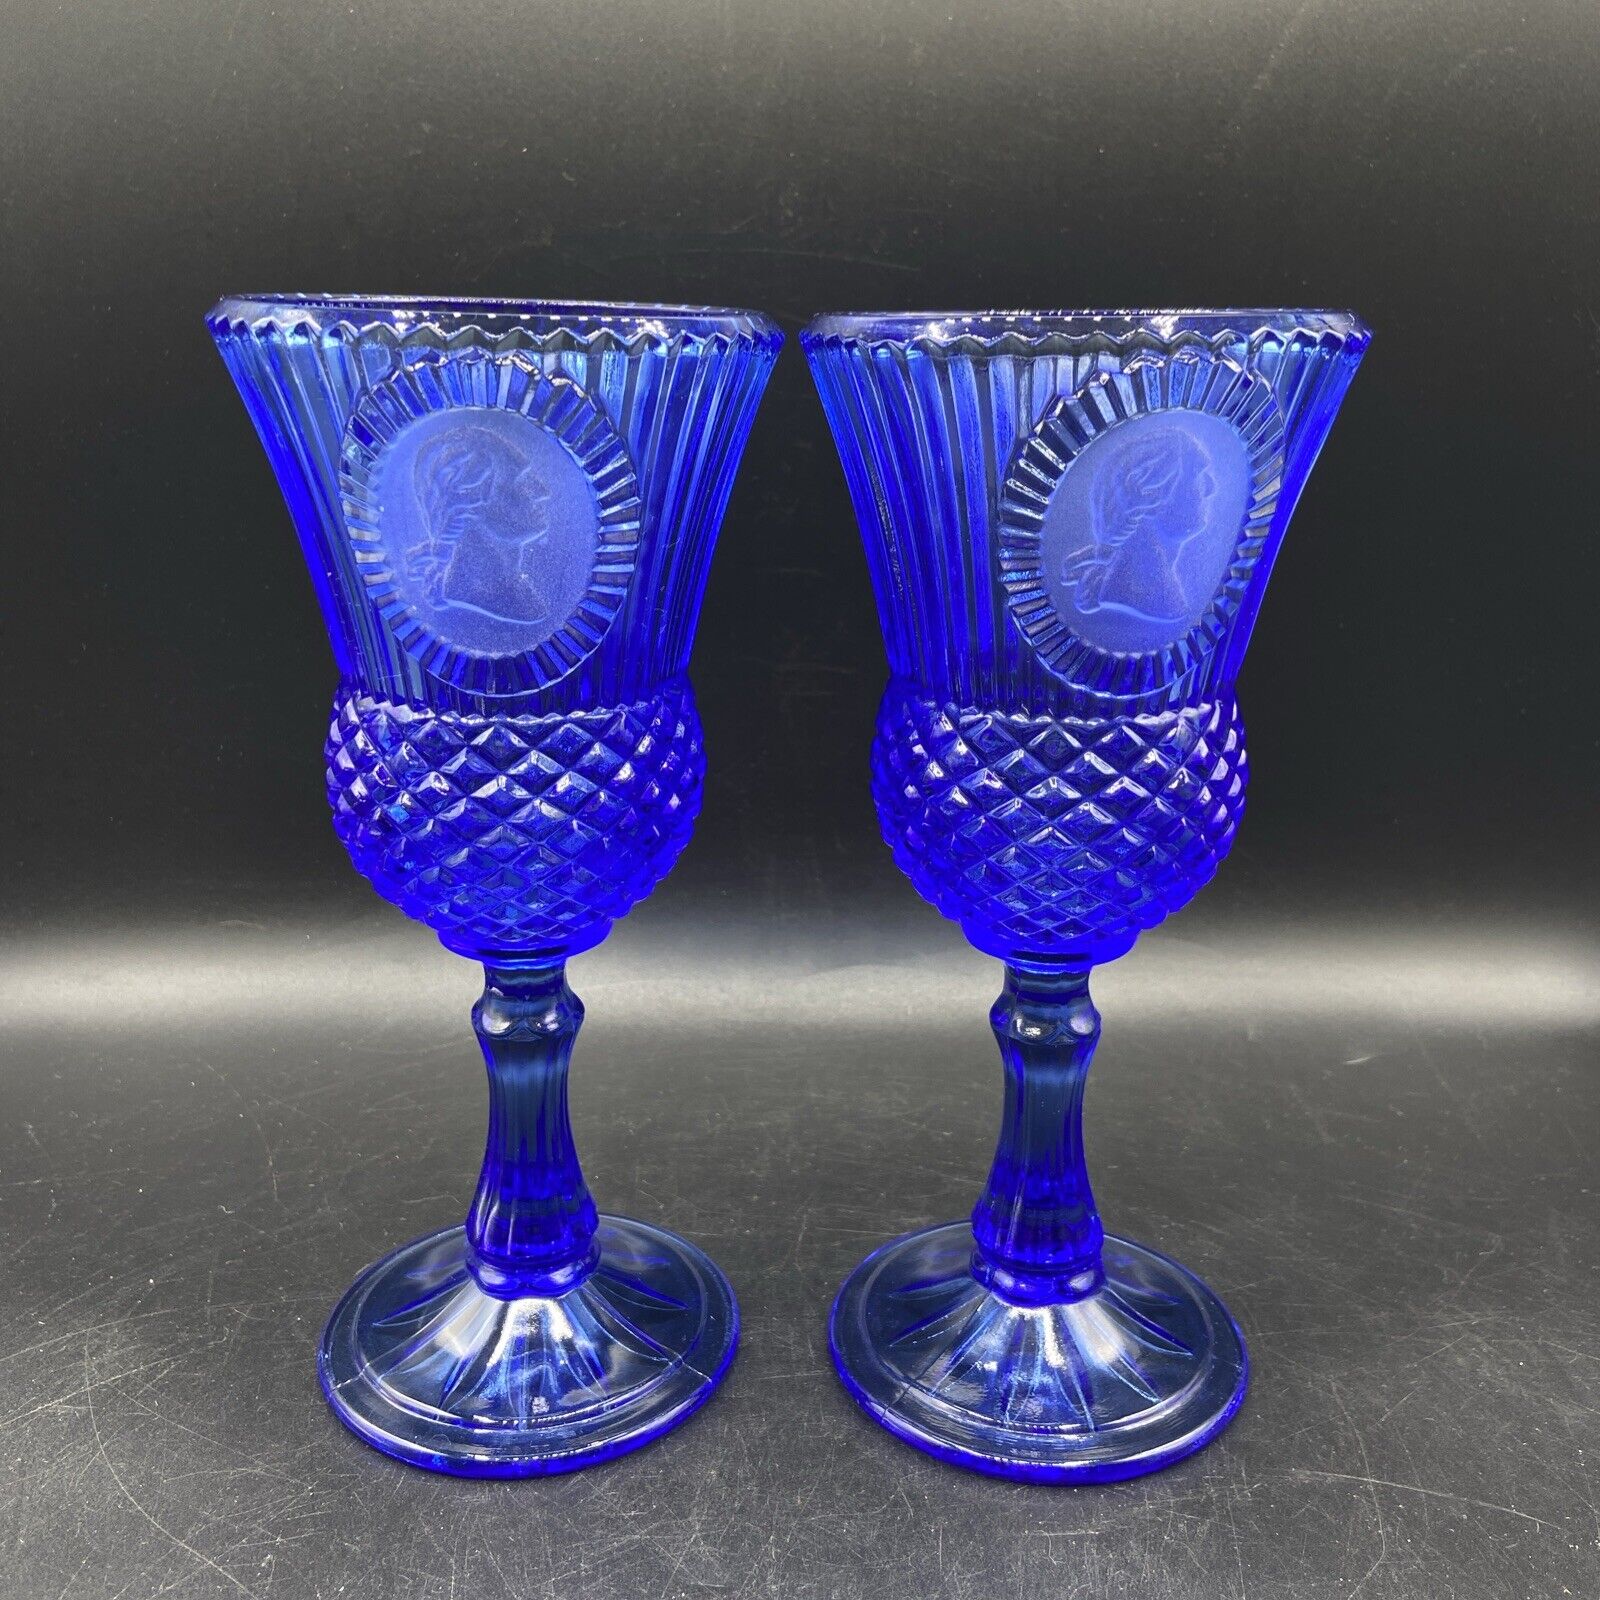 Two Vintage Avon Fostoria Cobalt Blue Goblets George Washington 1976